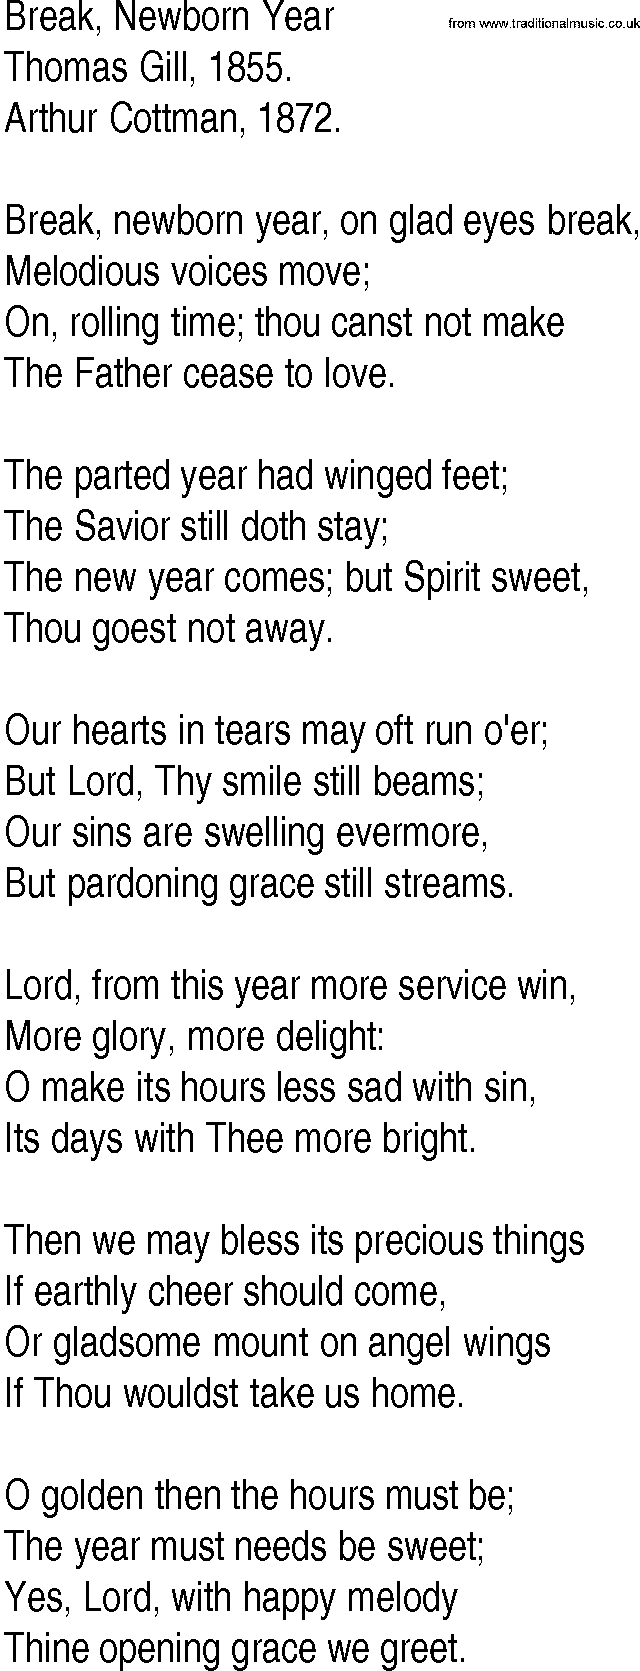 Hymn and Gospel Song: Break, Newborn Year by Thomas Gill lyrics